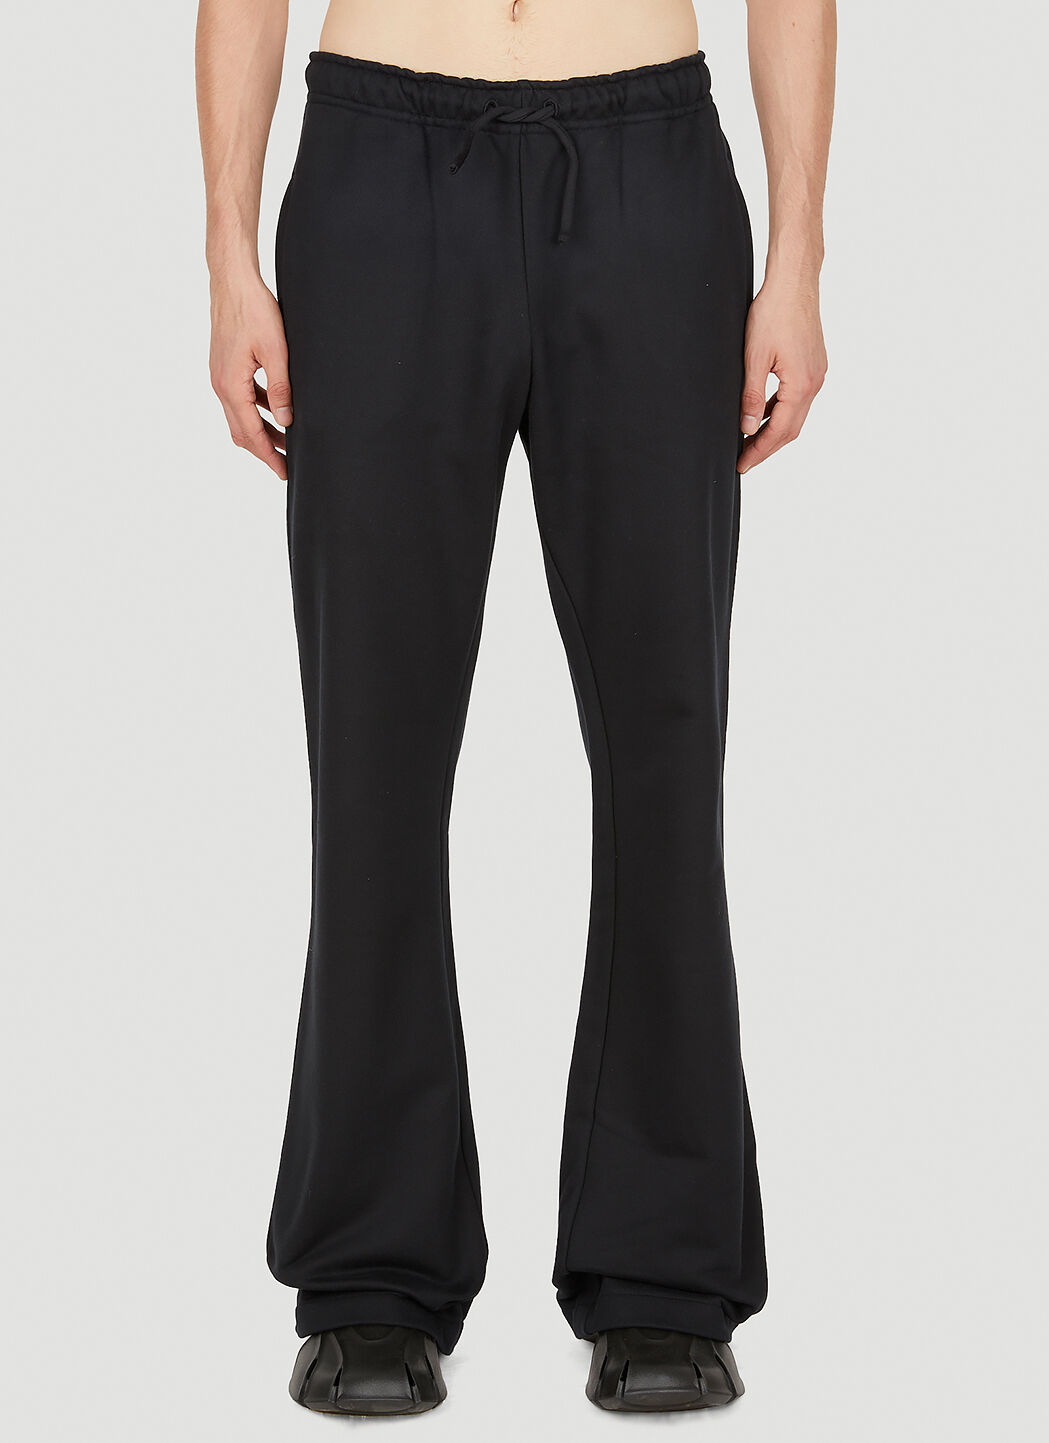 HUPOM Women'S Athletic Pants Pants Track Pants High Waist Rise Long Cropped  Flare Khaki XS - Walmart.com